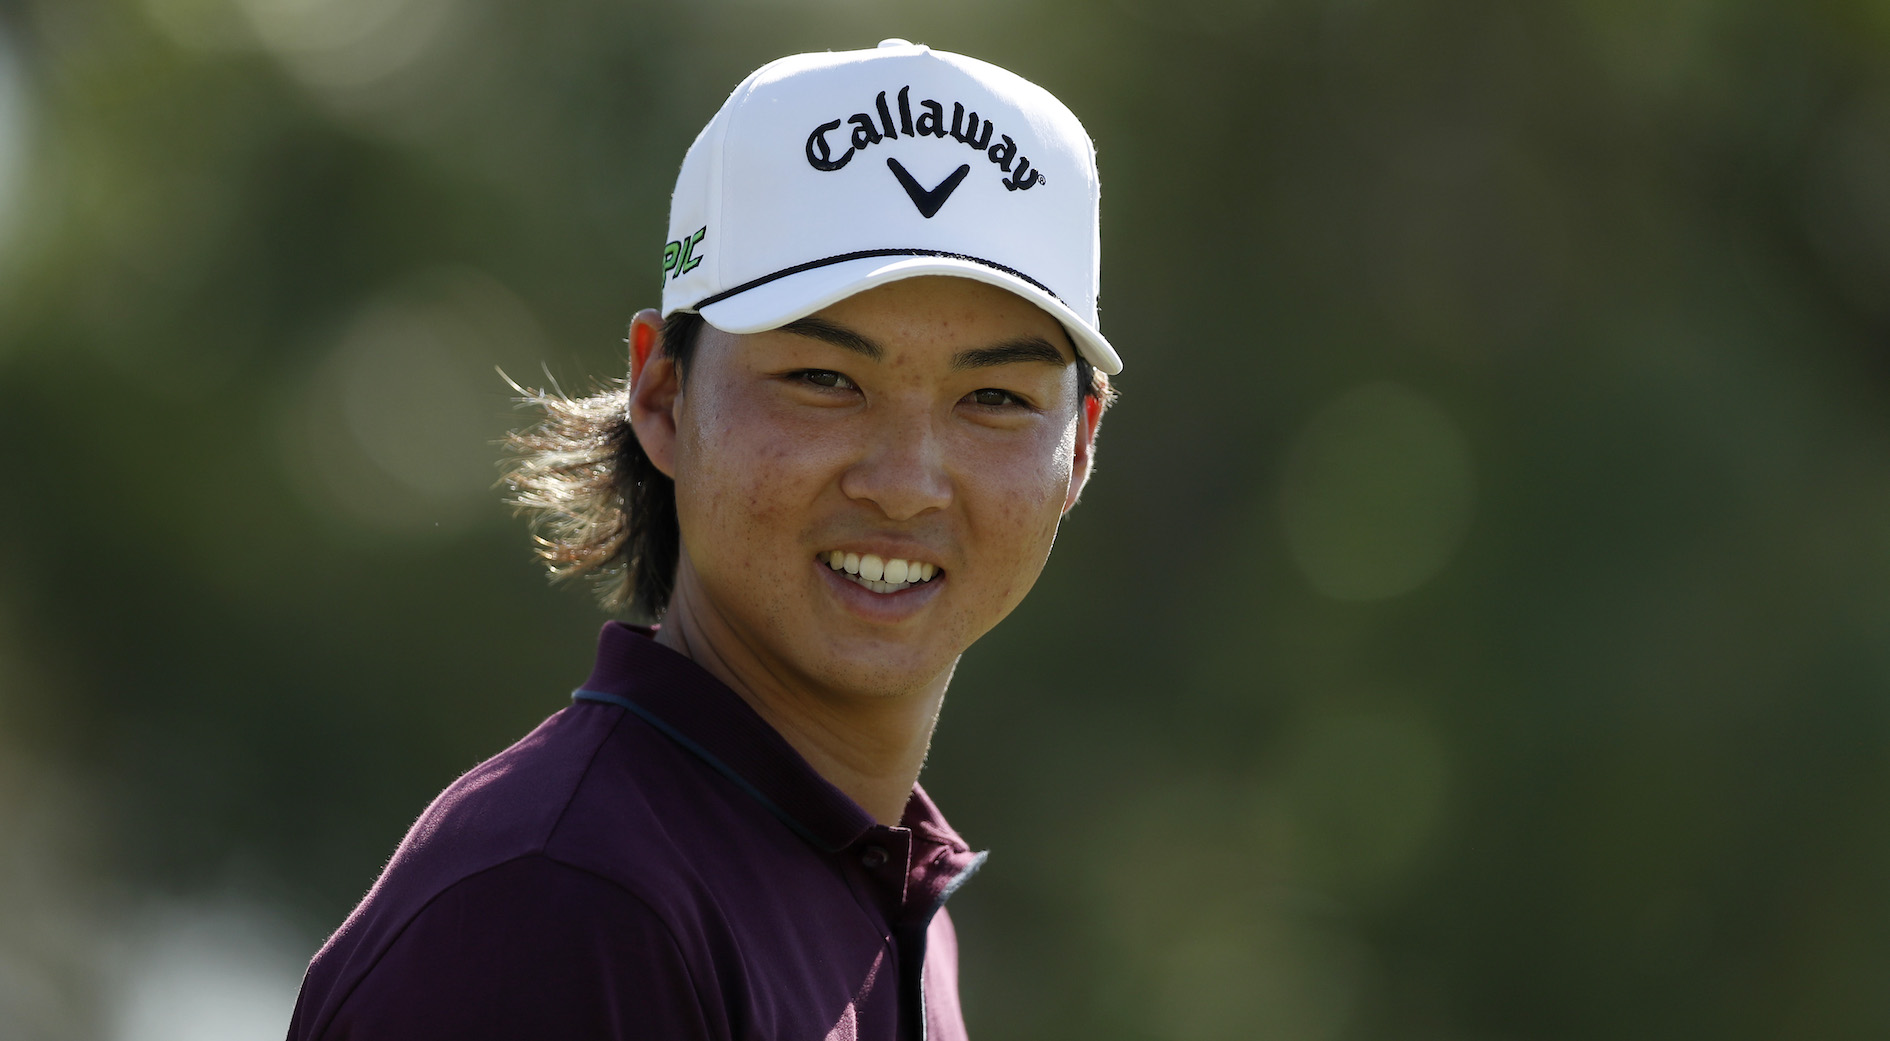 Aussies on Tour Top50 ranking beckons for Min Woo Golf Australia